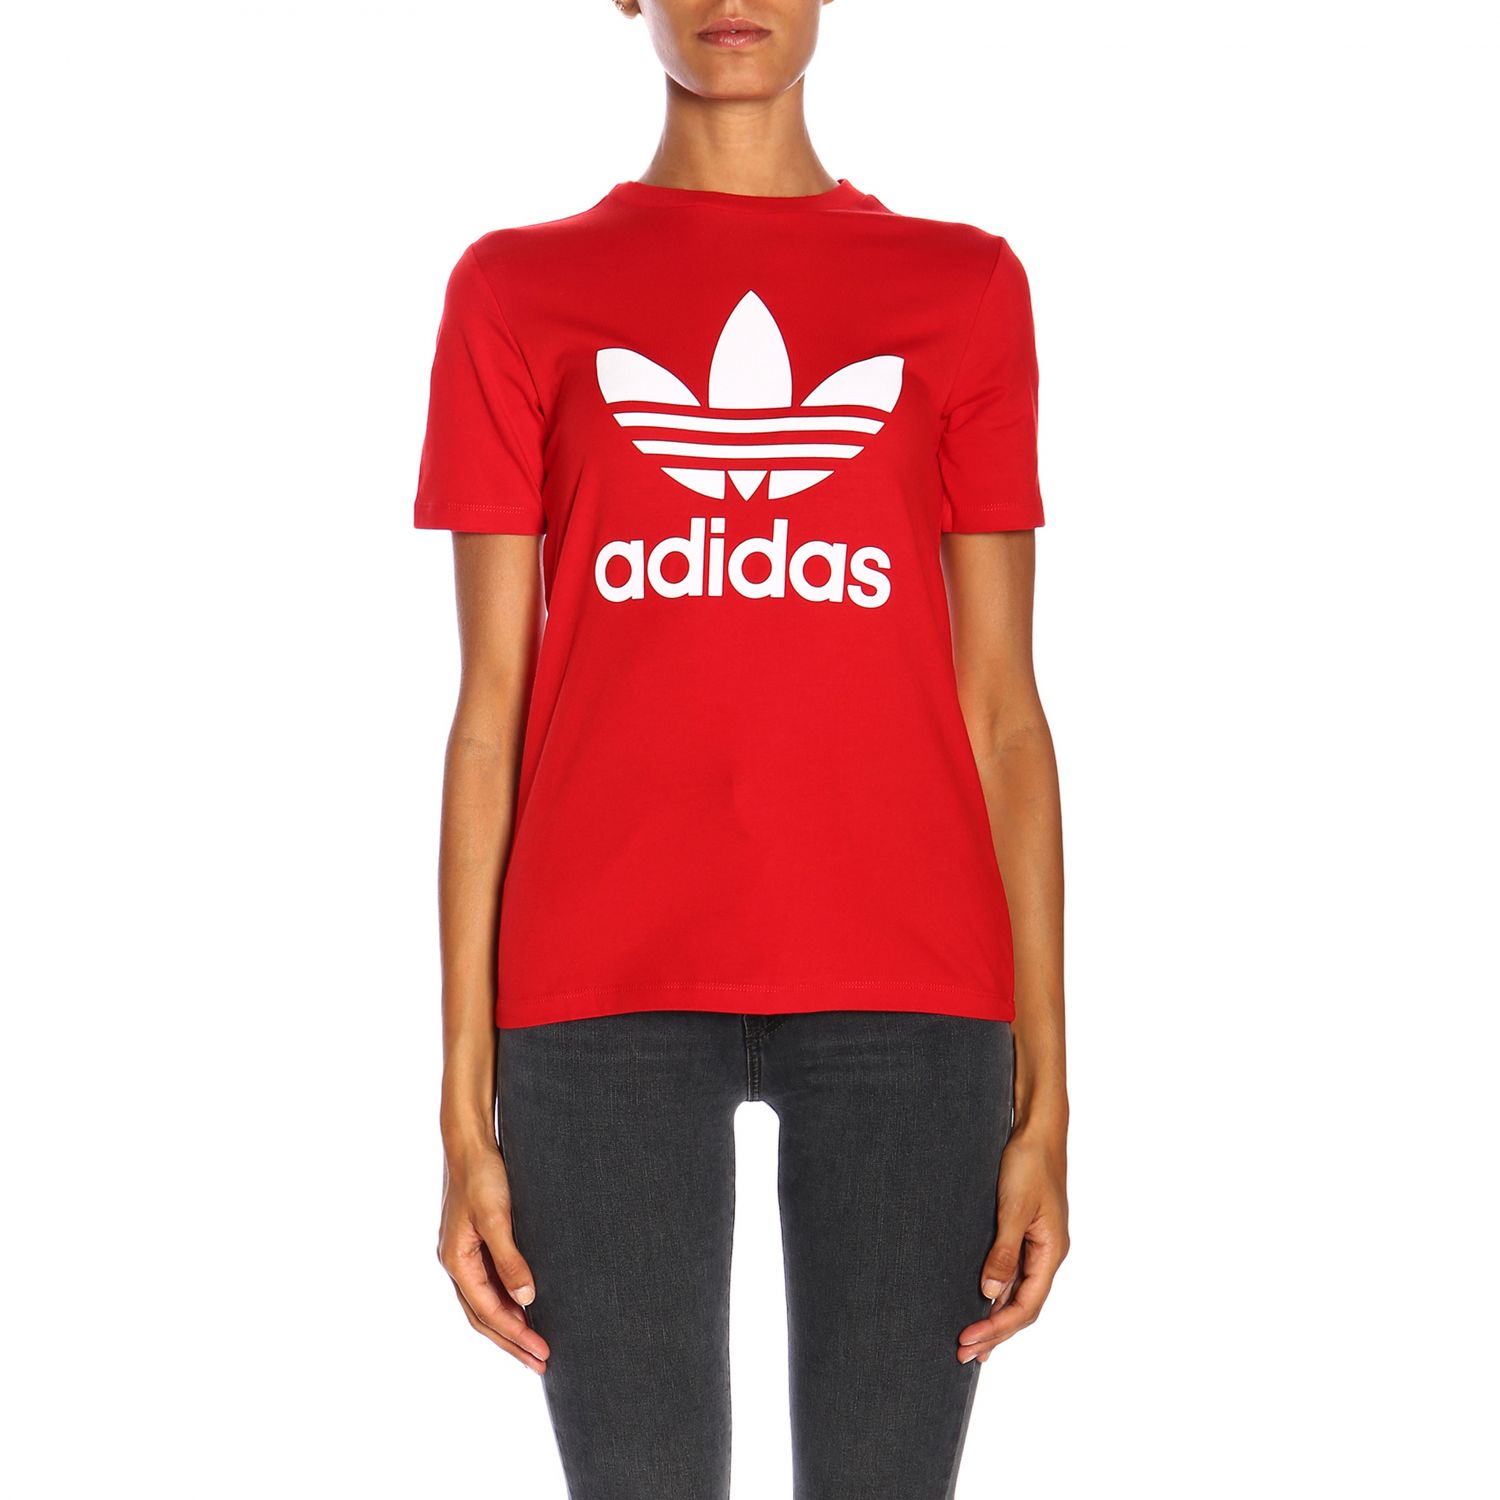 adidas t shirt women's red